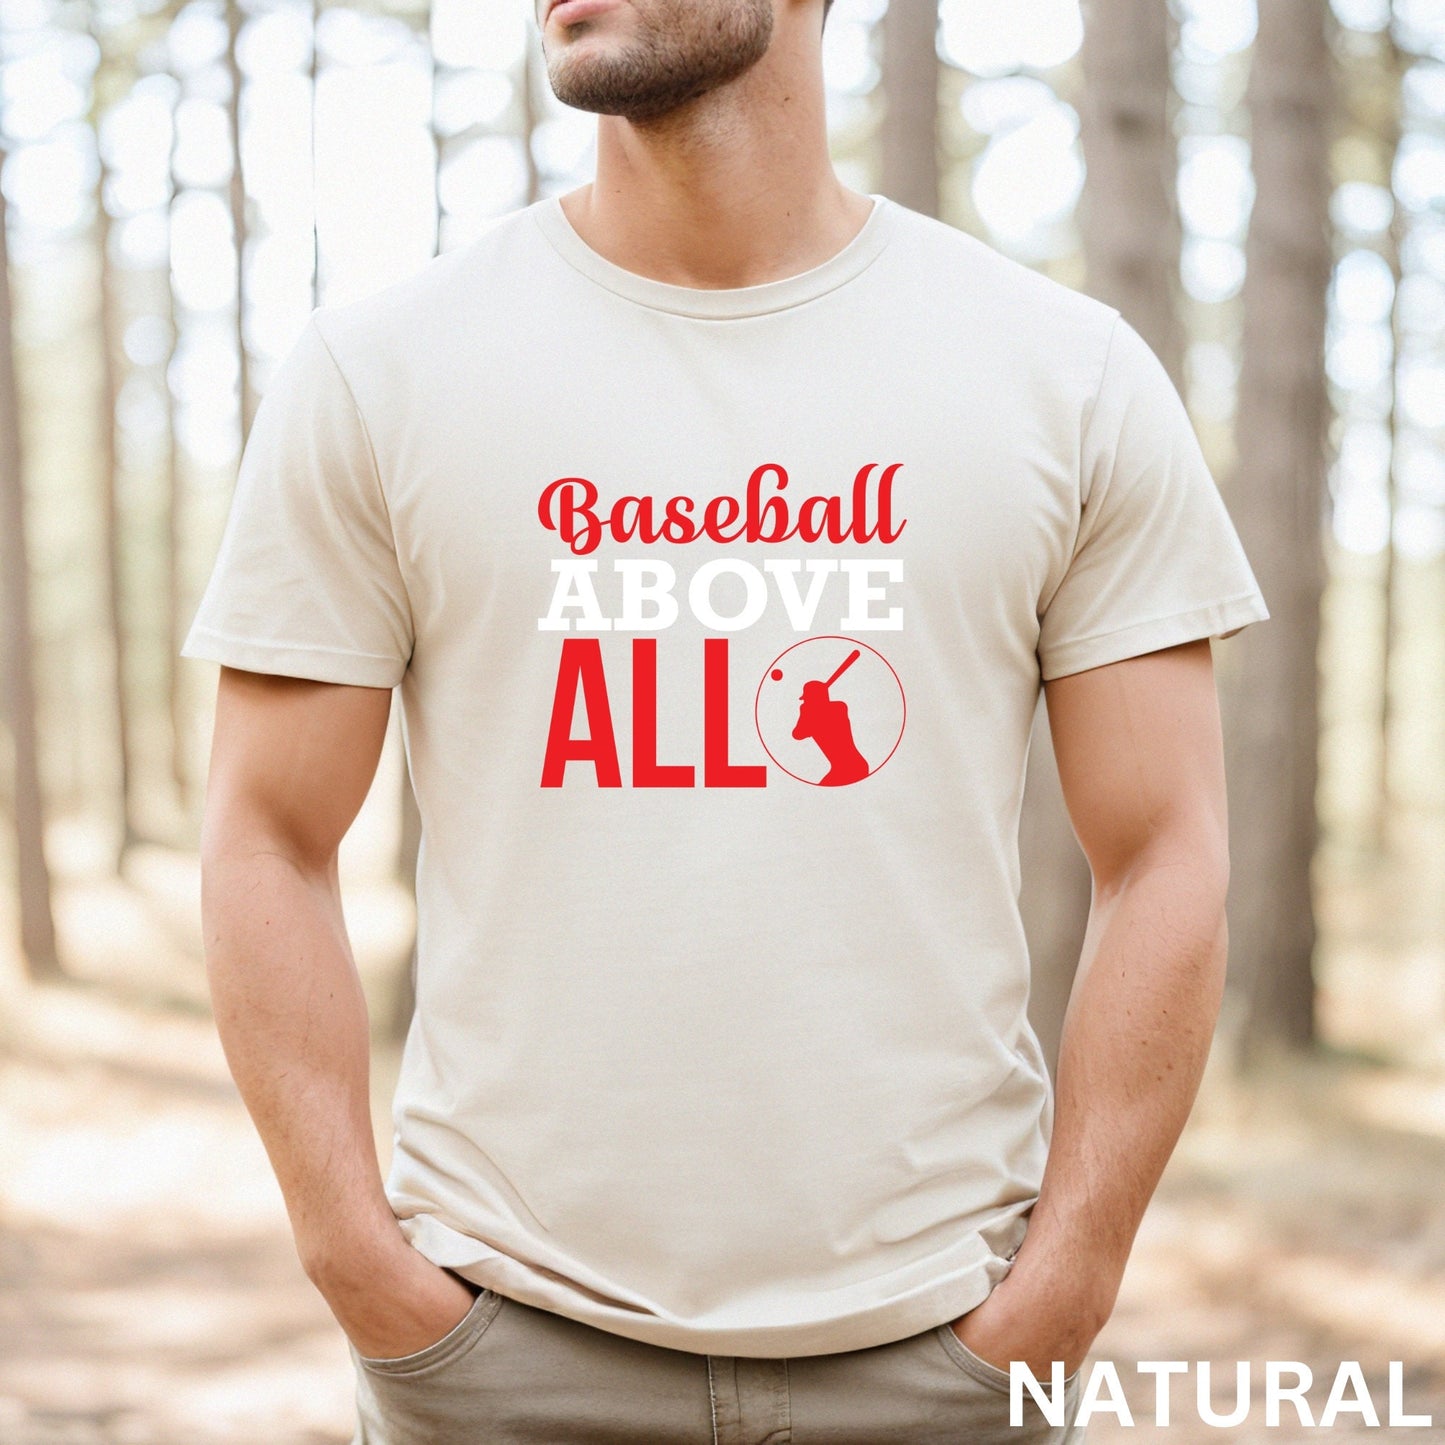 Play Ball Shirt, Baseball Tee, Vintage Retro Design, Softball, Tee Ball, Little League, Baseball Mom Tshirt